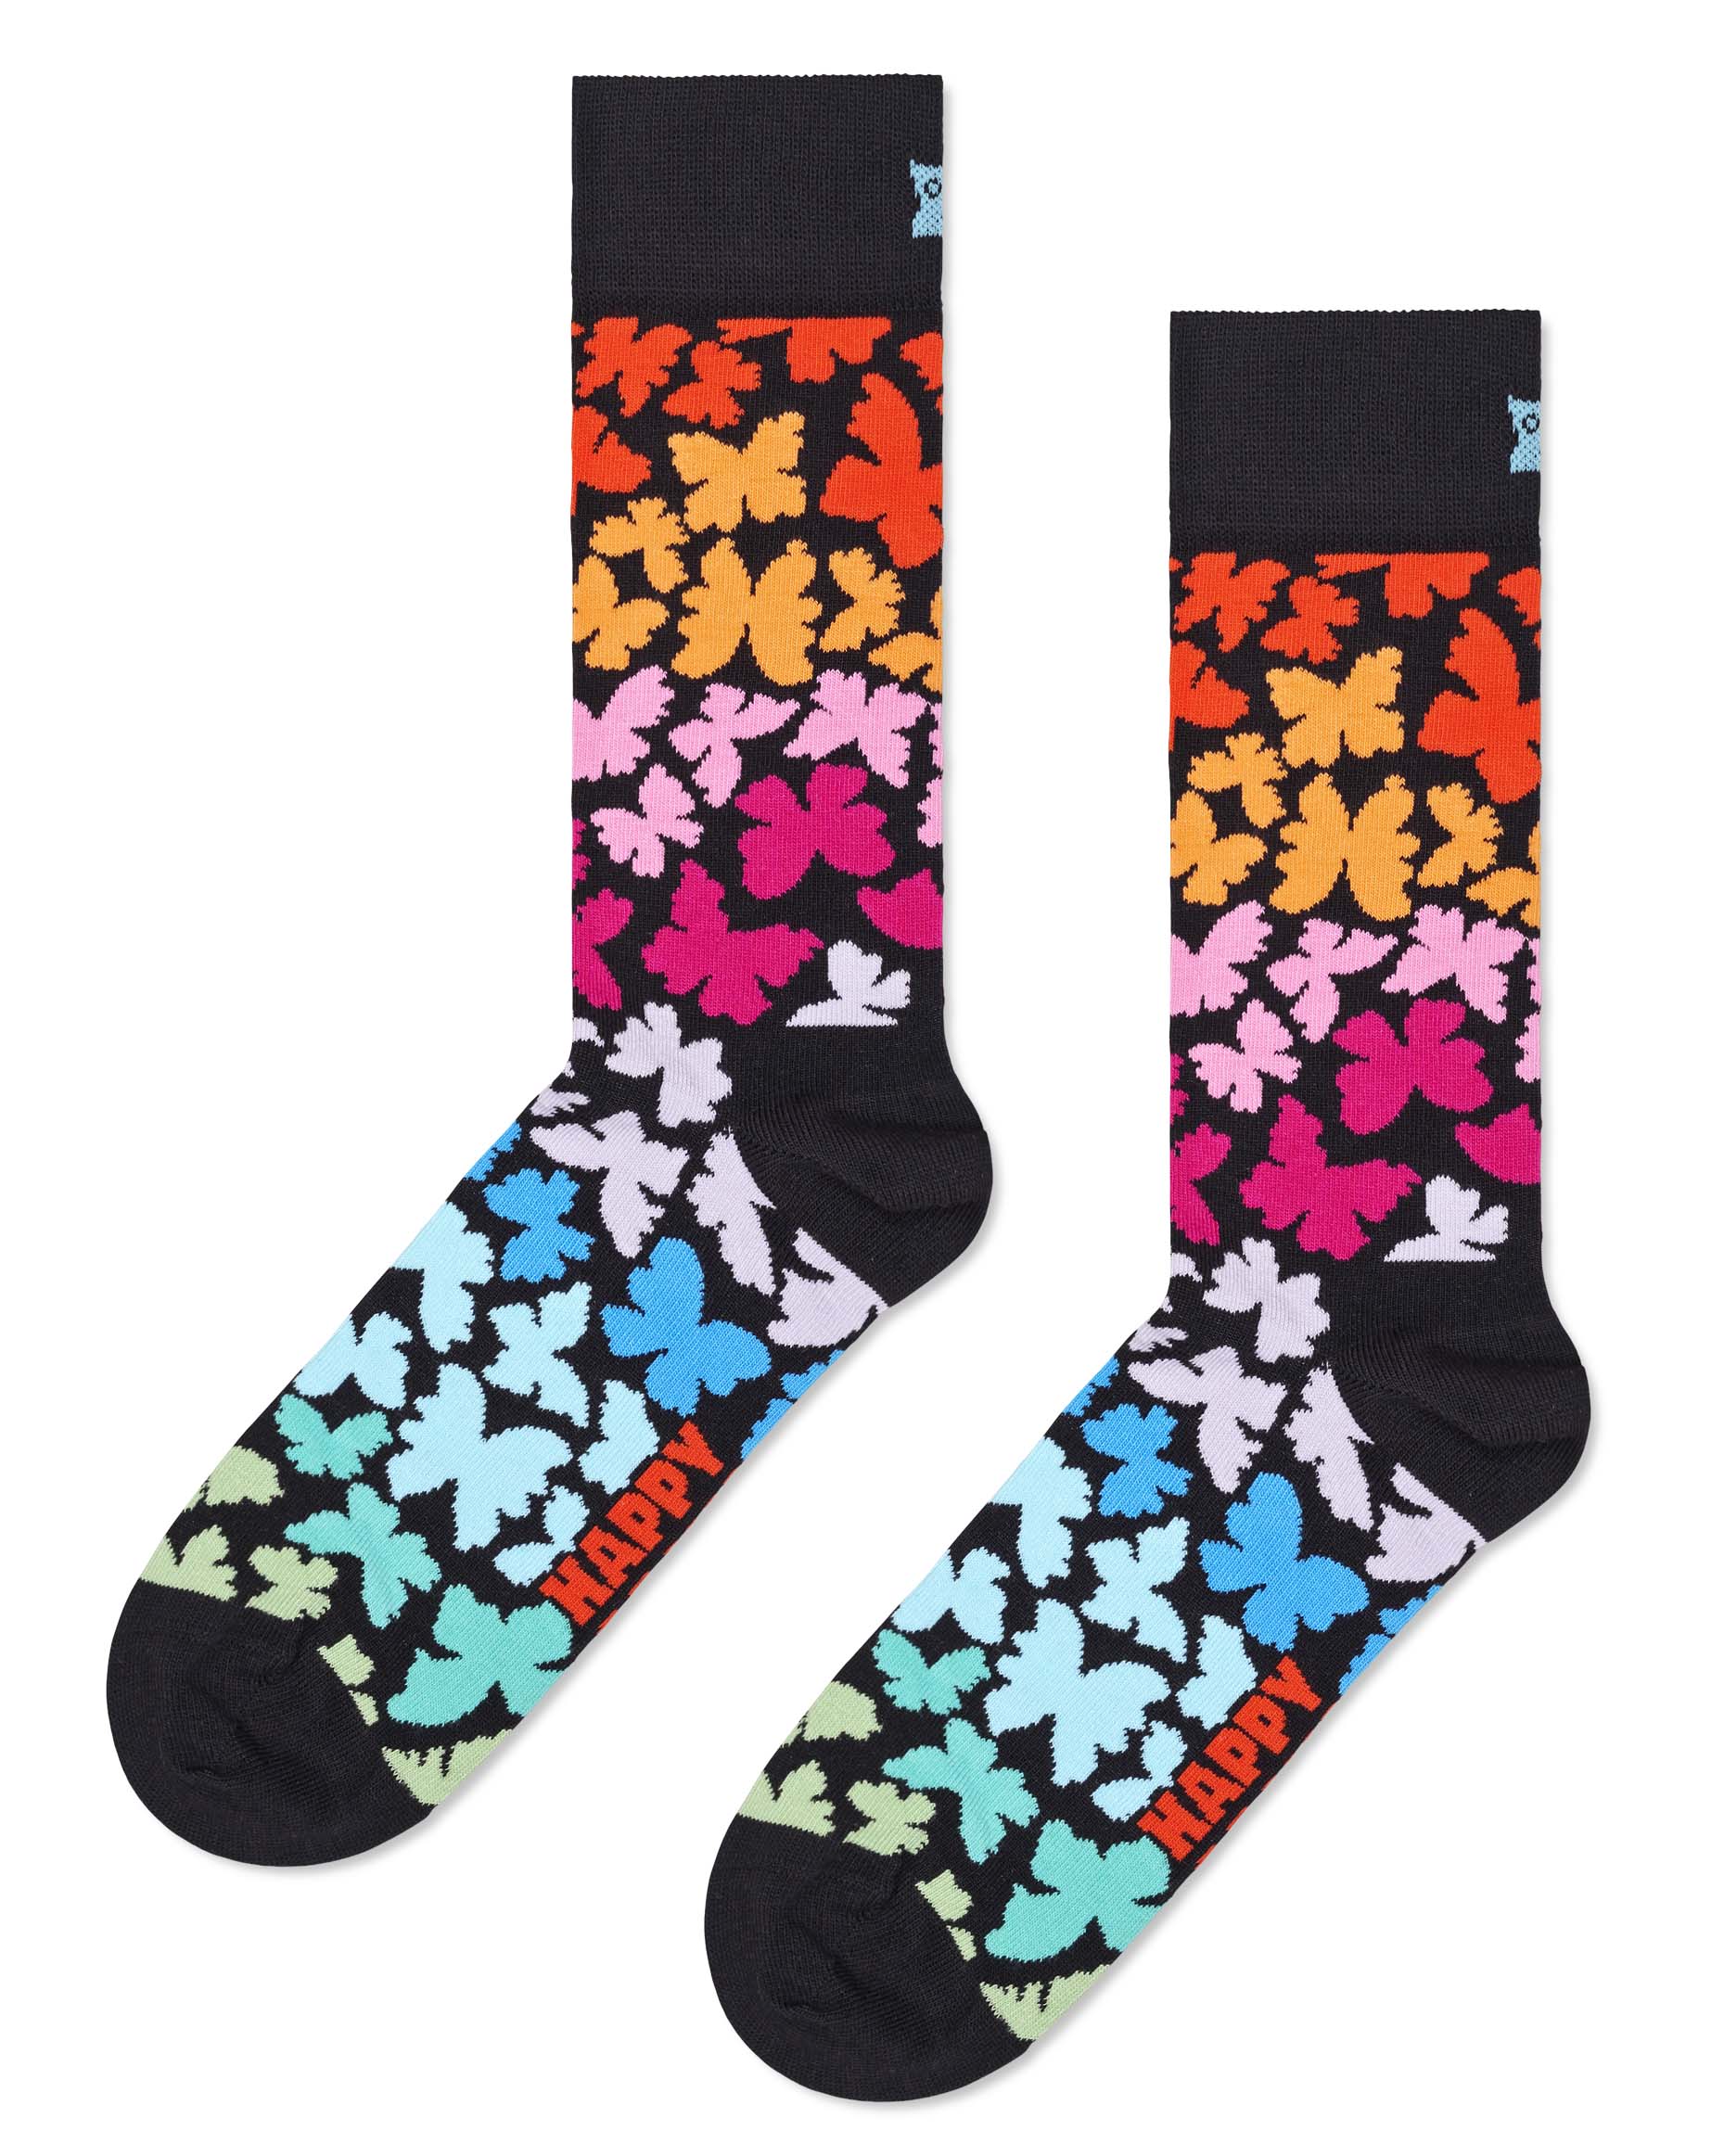 Happy Socks P000154 Butterfly Socks - Black crew length cotton socks with multicoloured butterfly pattern.